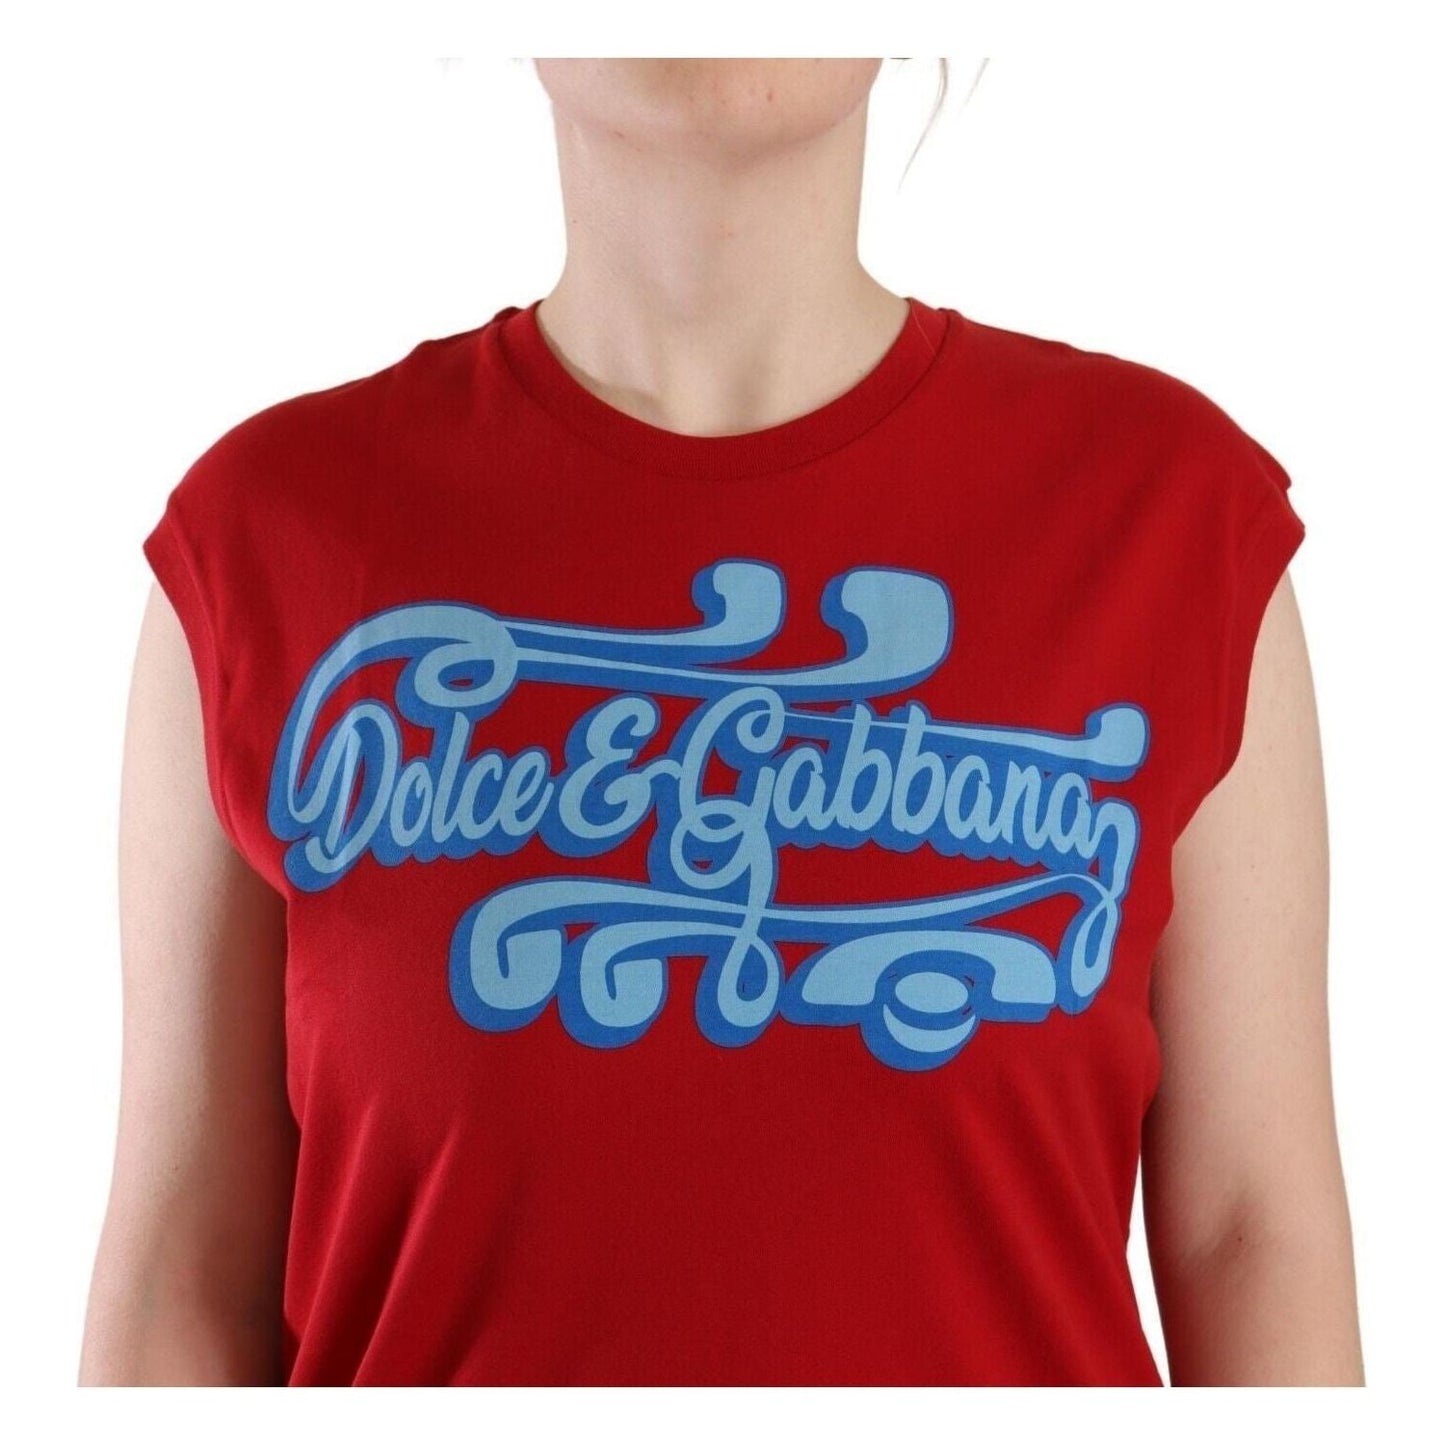 Dolce & Gabbana Elegant Sleeveless Crew Neck Tank Top red-cotton-sleeveless-crewneck-t-shirt-tank-top